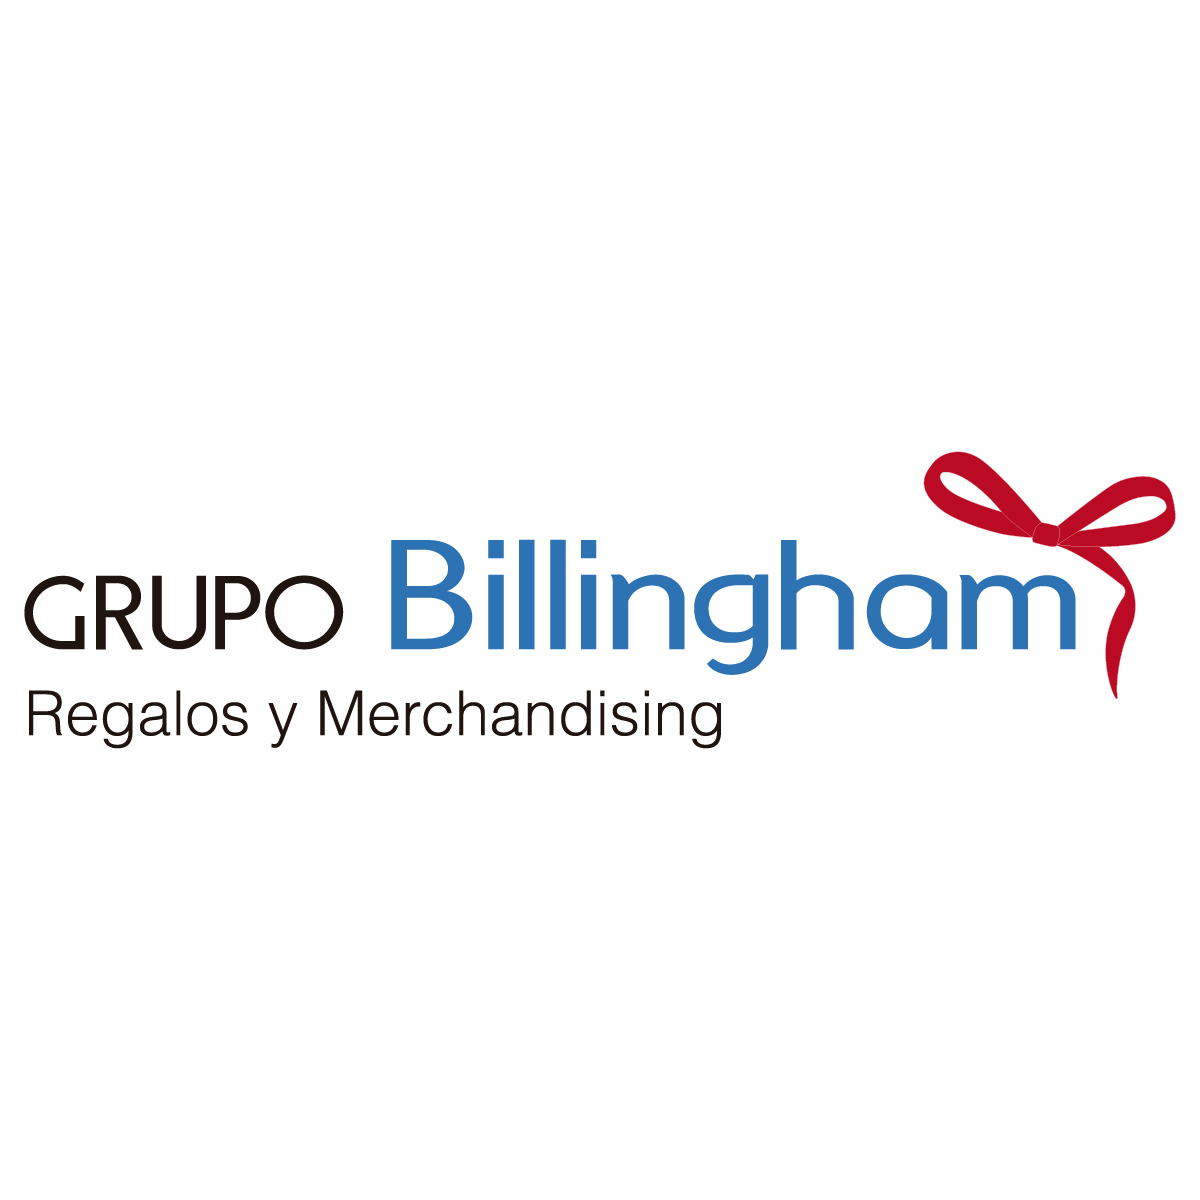 Grupo Billingham